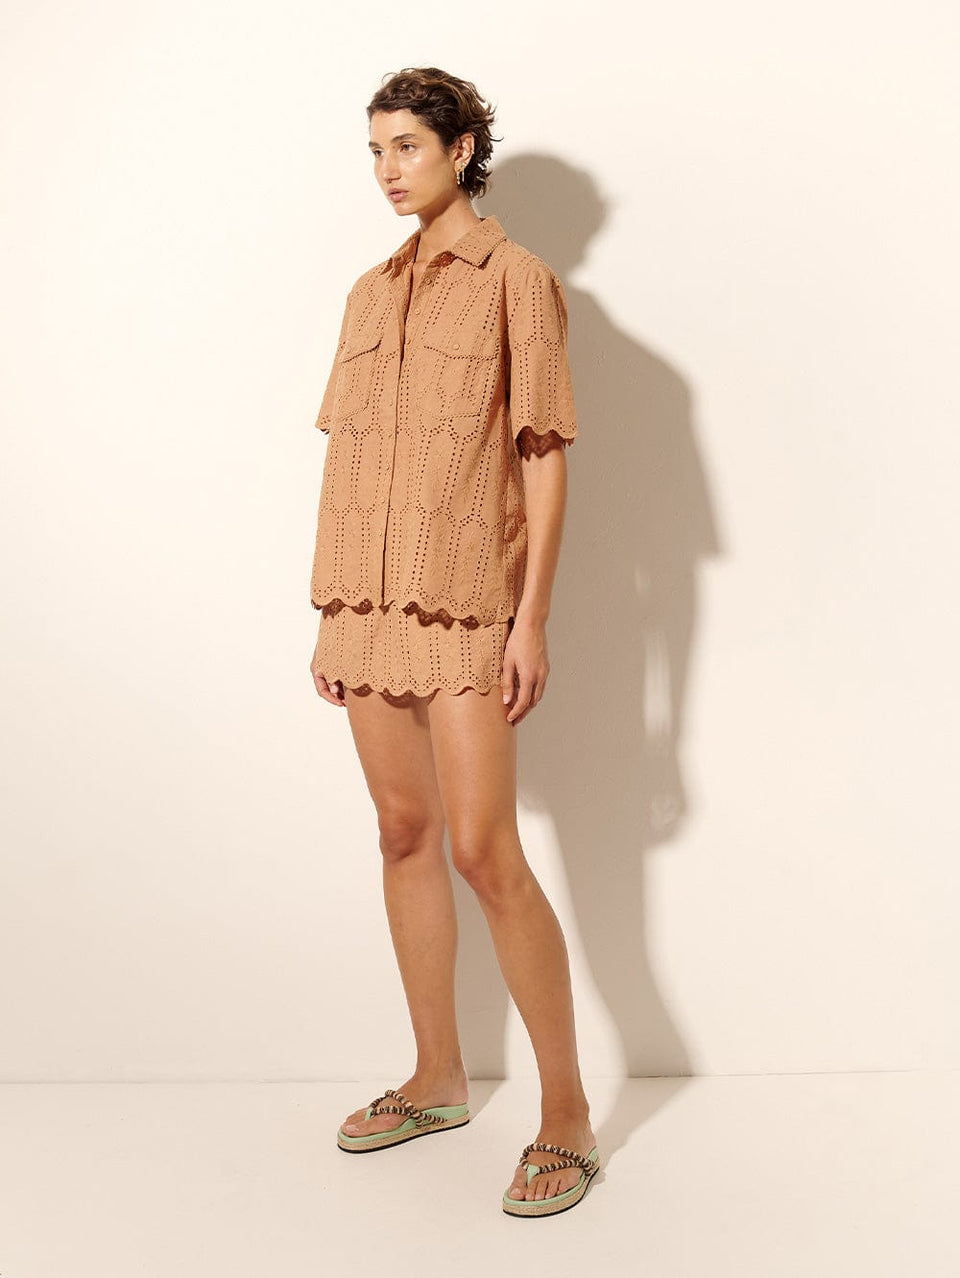 Estelle Short Mocha KIVARI | Model wears brown shorts with lace detail side view